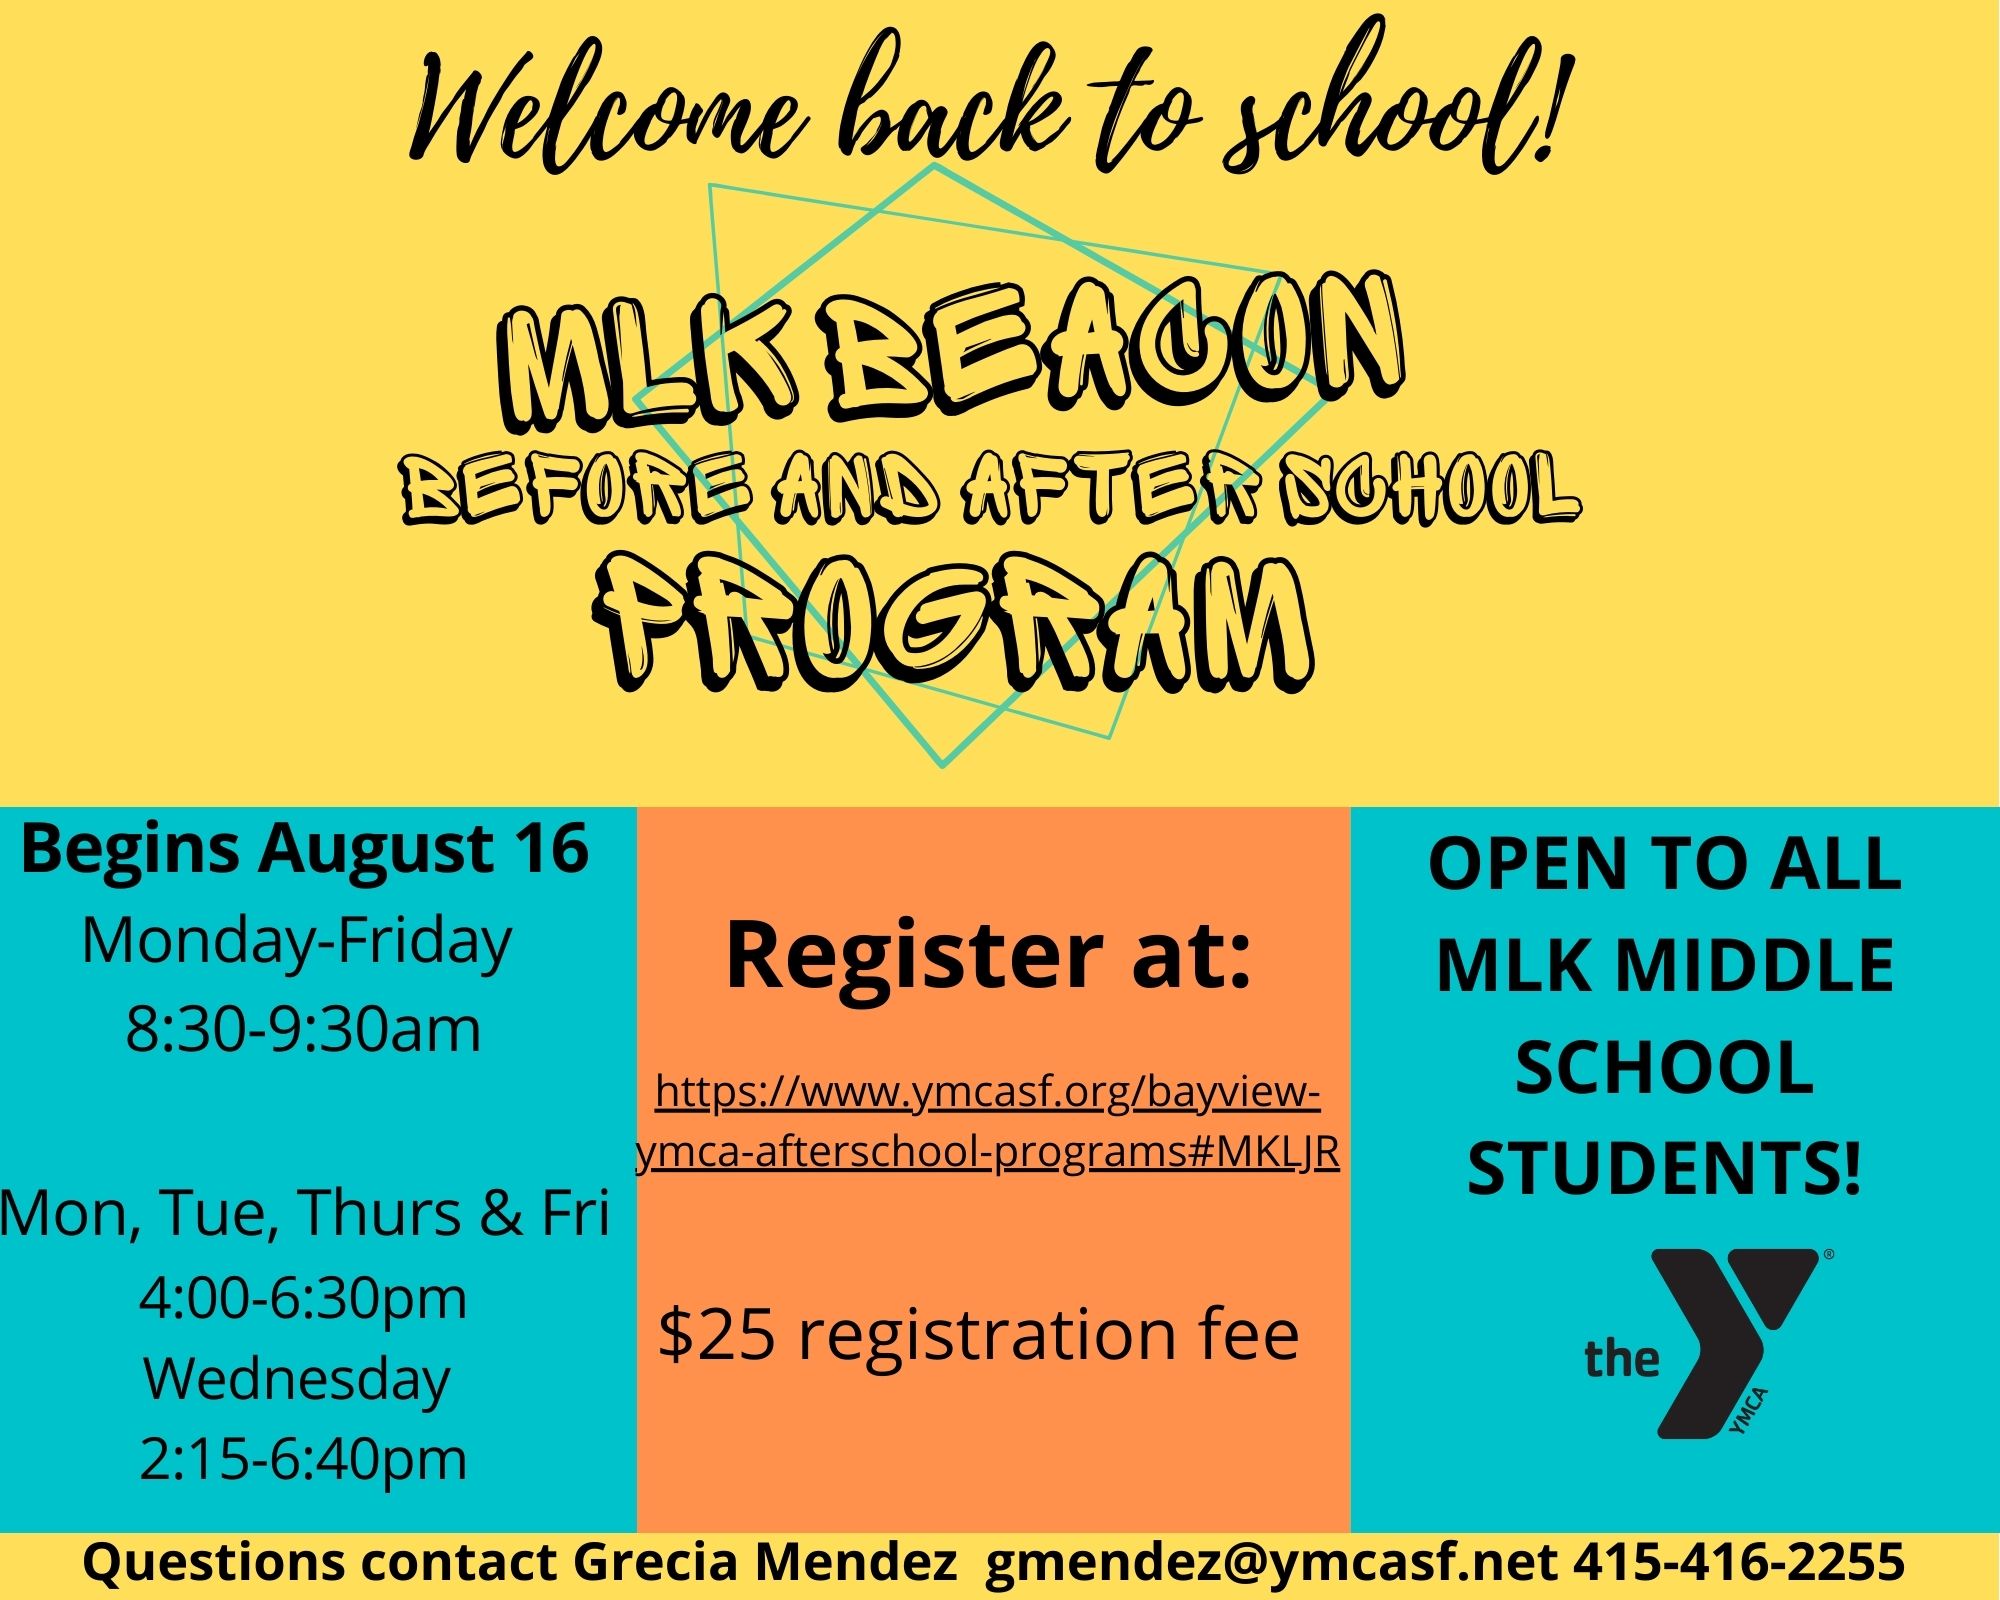 MLK Beacon Summer Legacy Program SFUSD